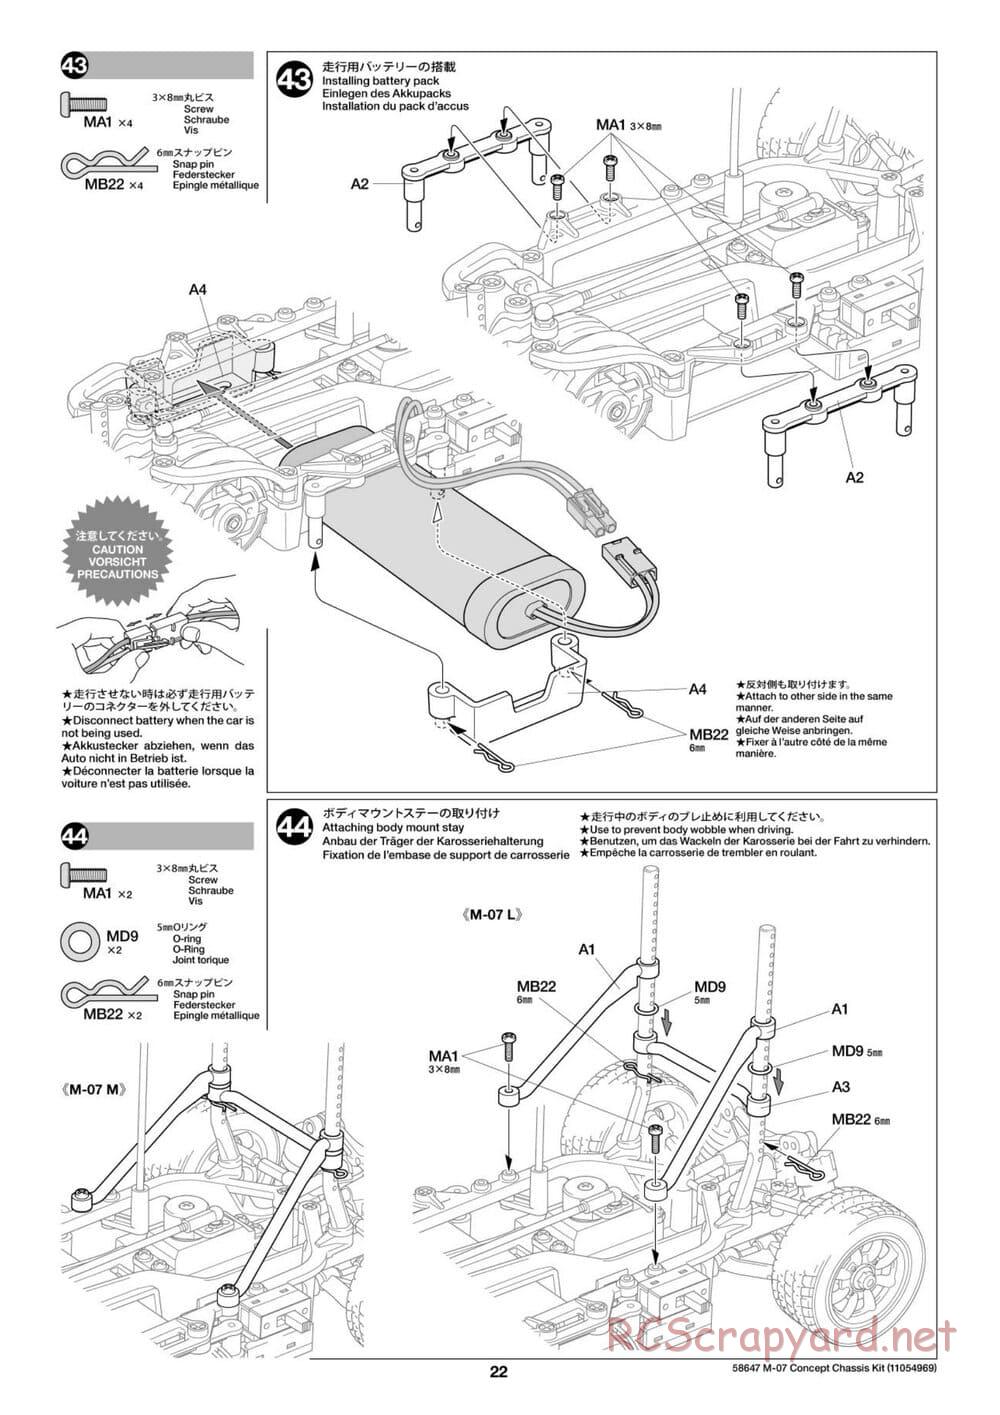 Tamiya - M-07 Concept Chassis - Manual - Page 22